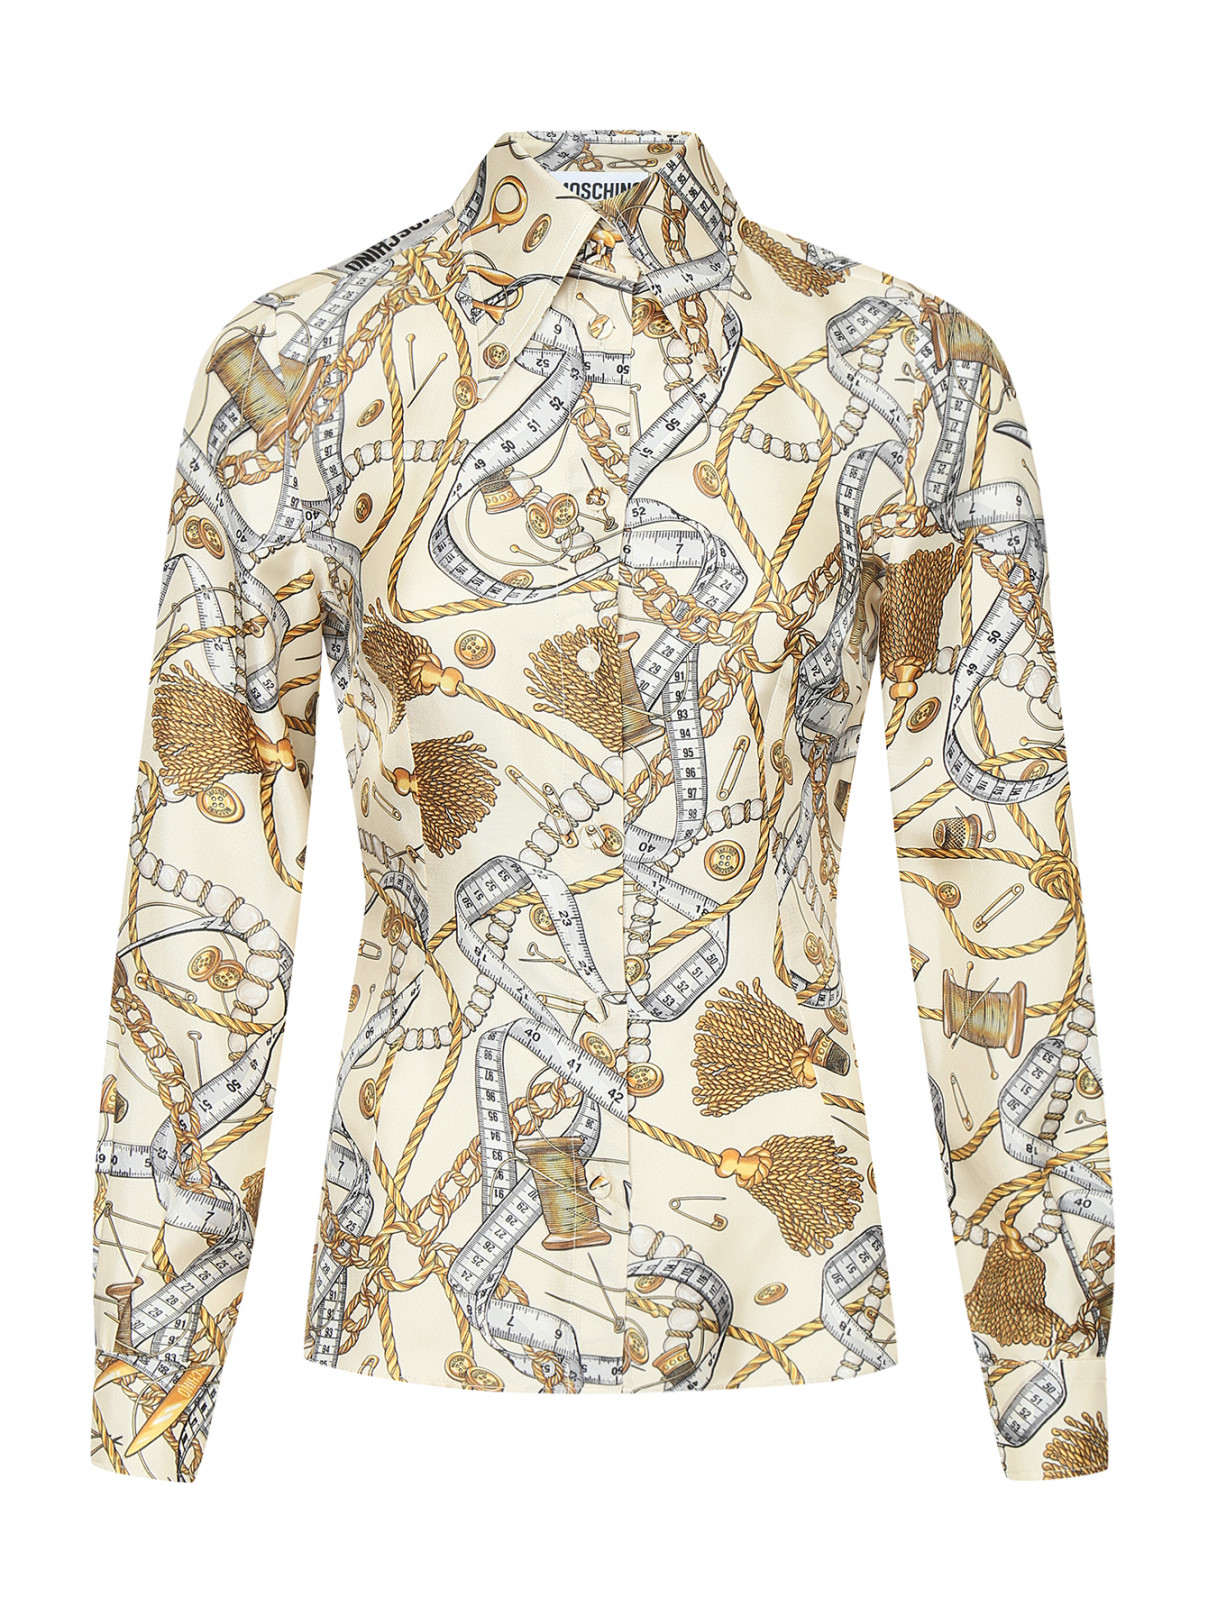 Блуза из шёлка с узором Moschino  –  Общий вид  – Цвет:  Бежевый